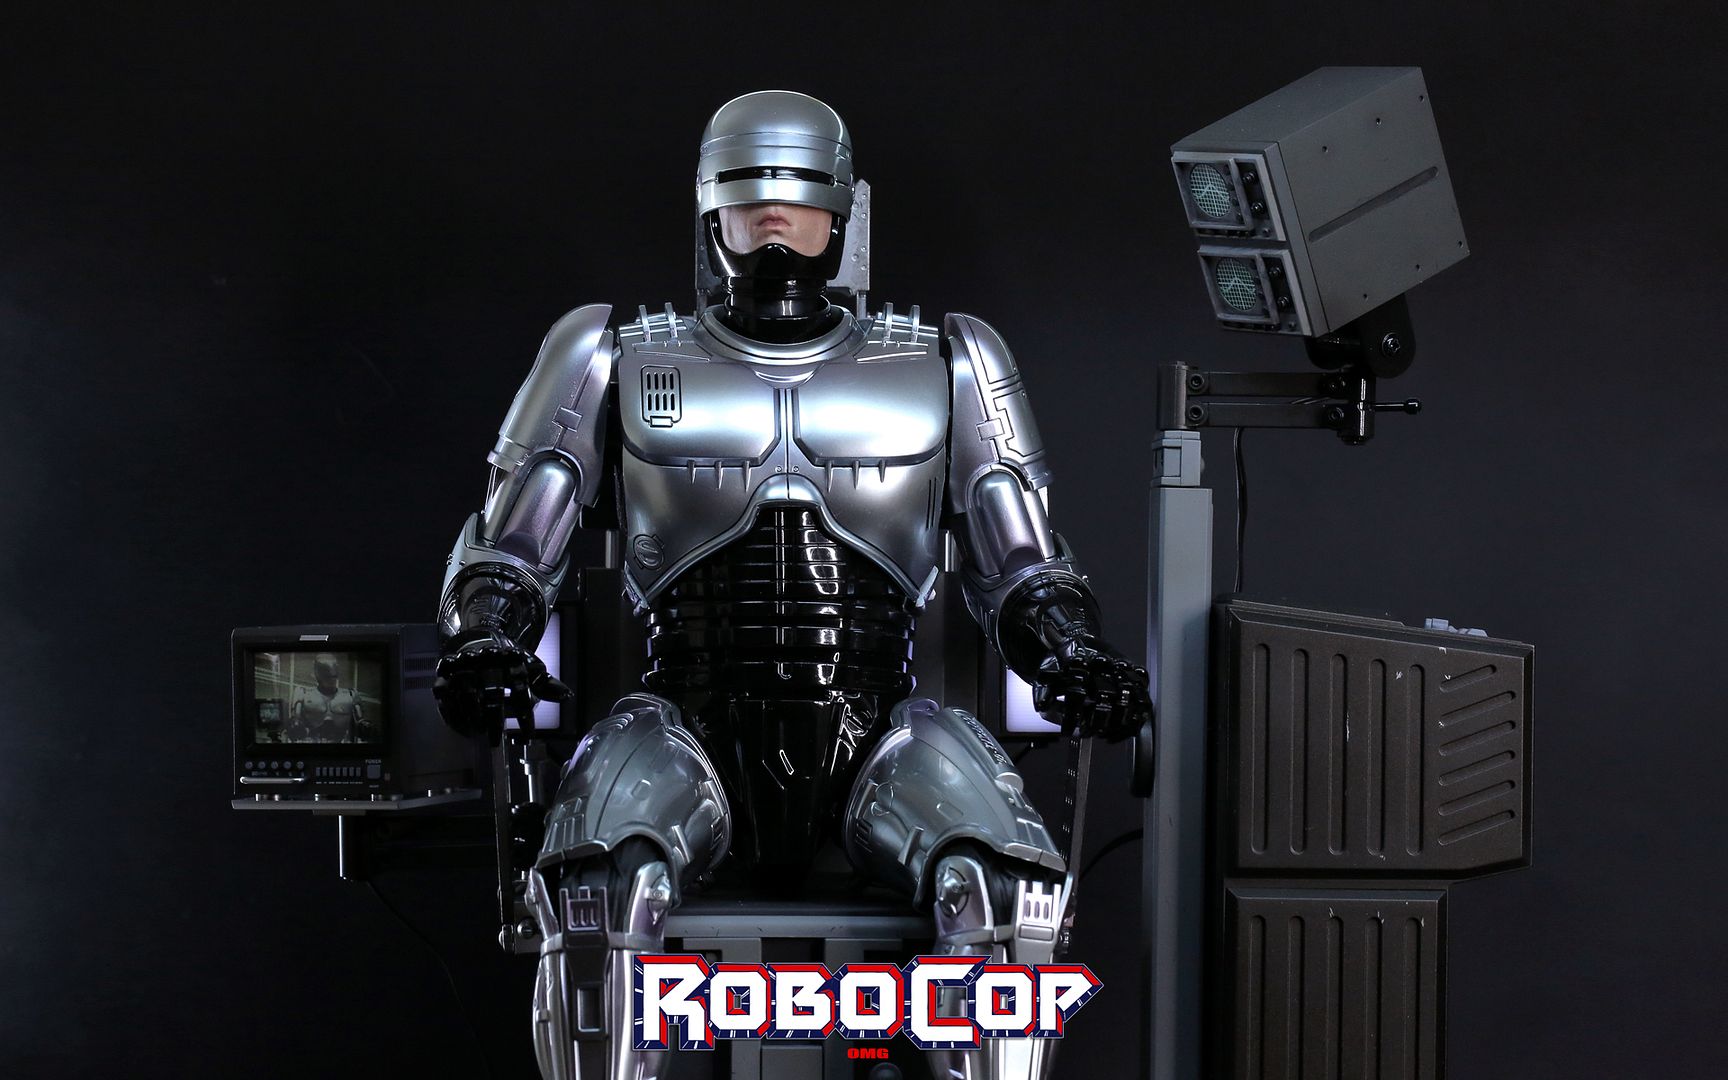 RobocopHD306_zps044b6439.jpg